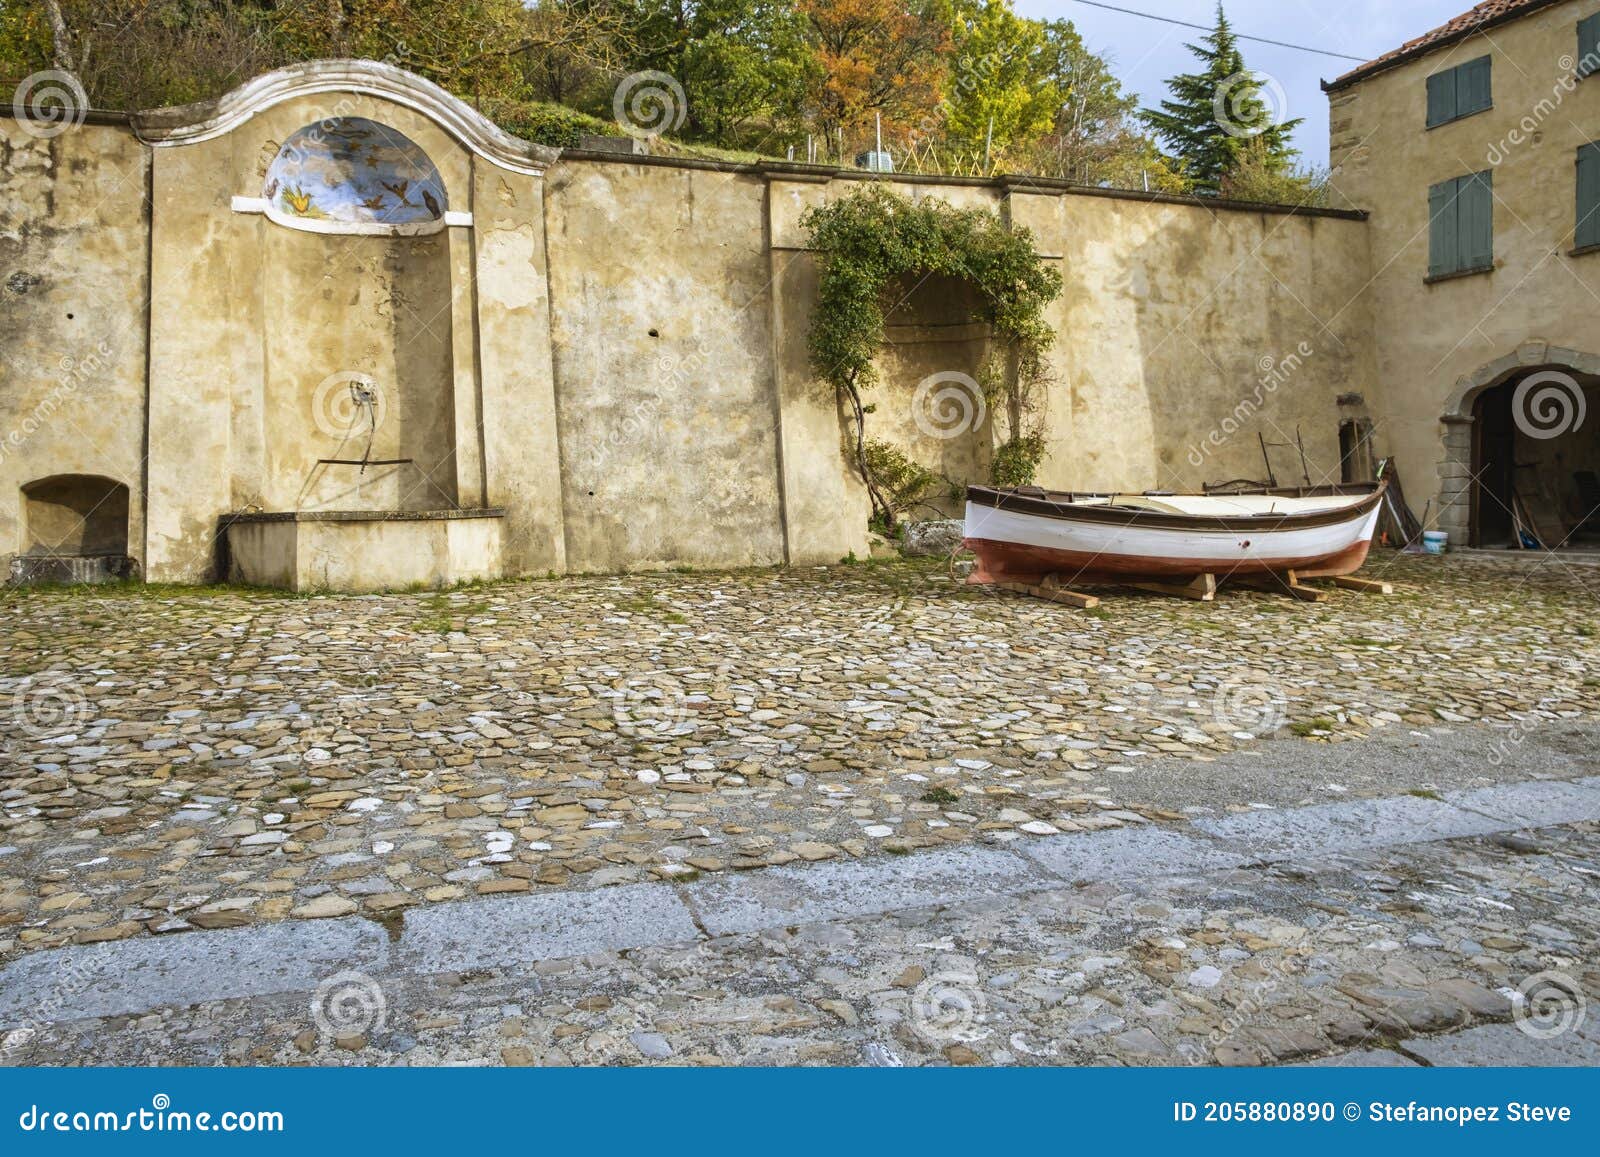 borgo adorno castle backyard. color image